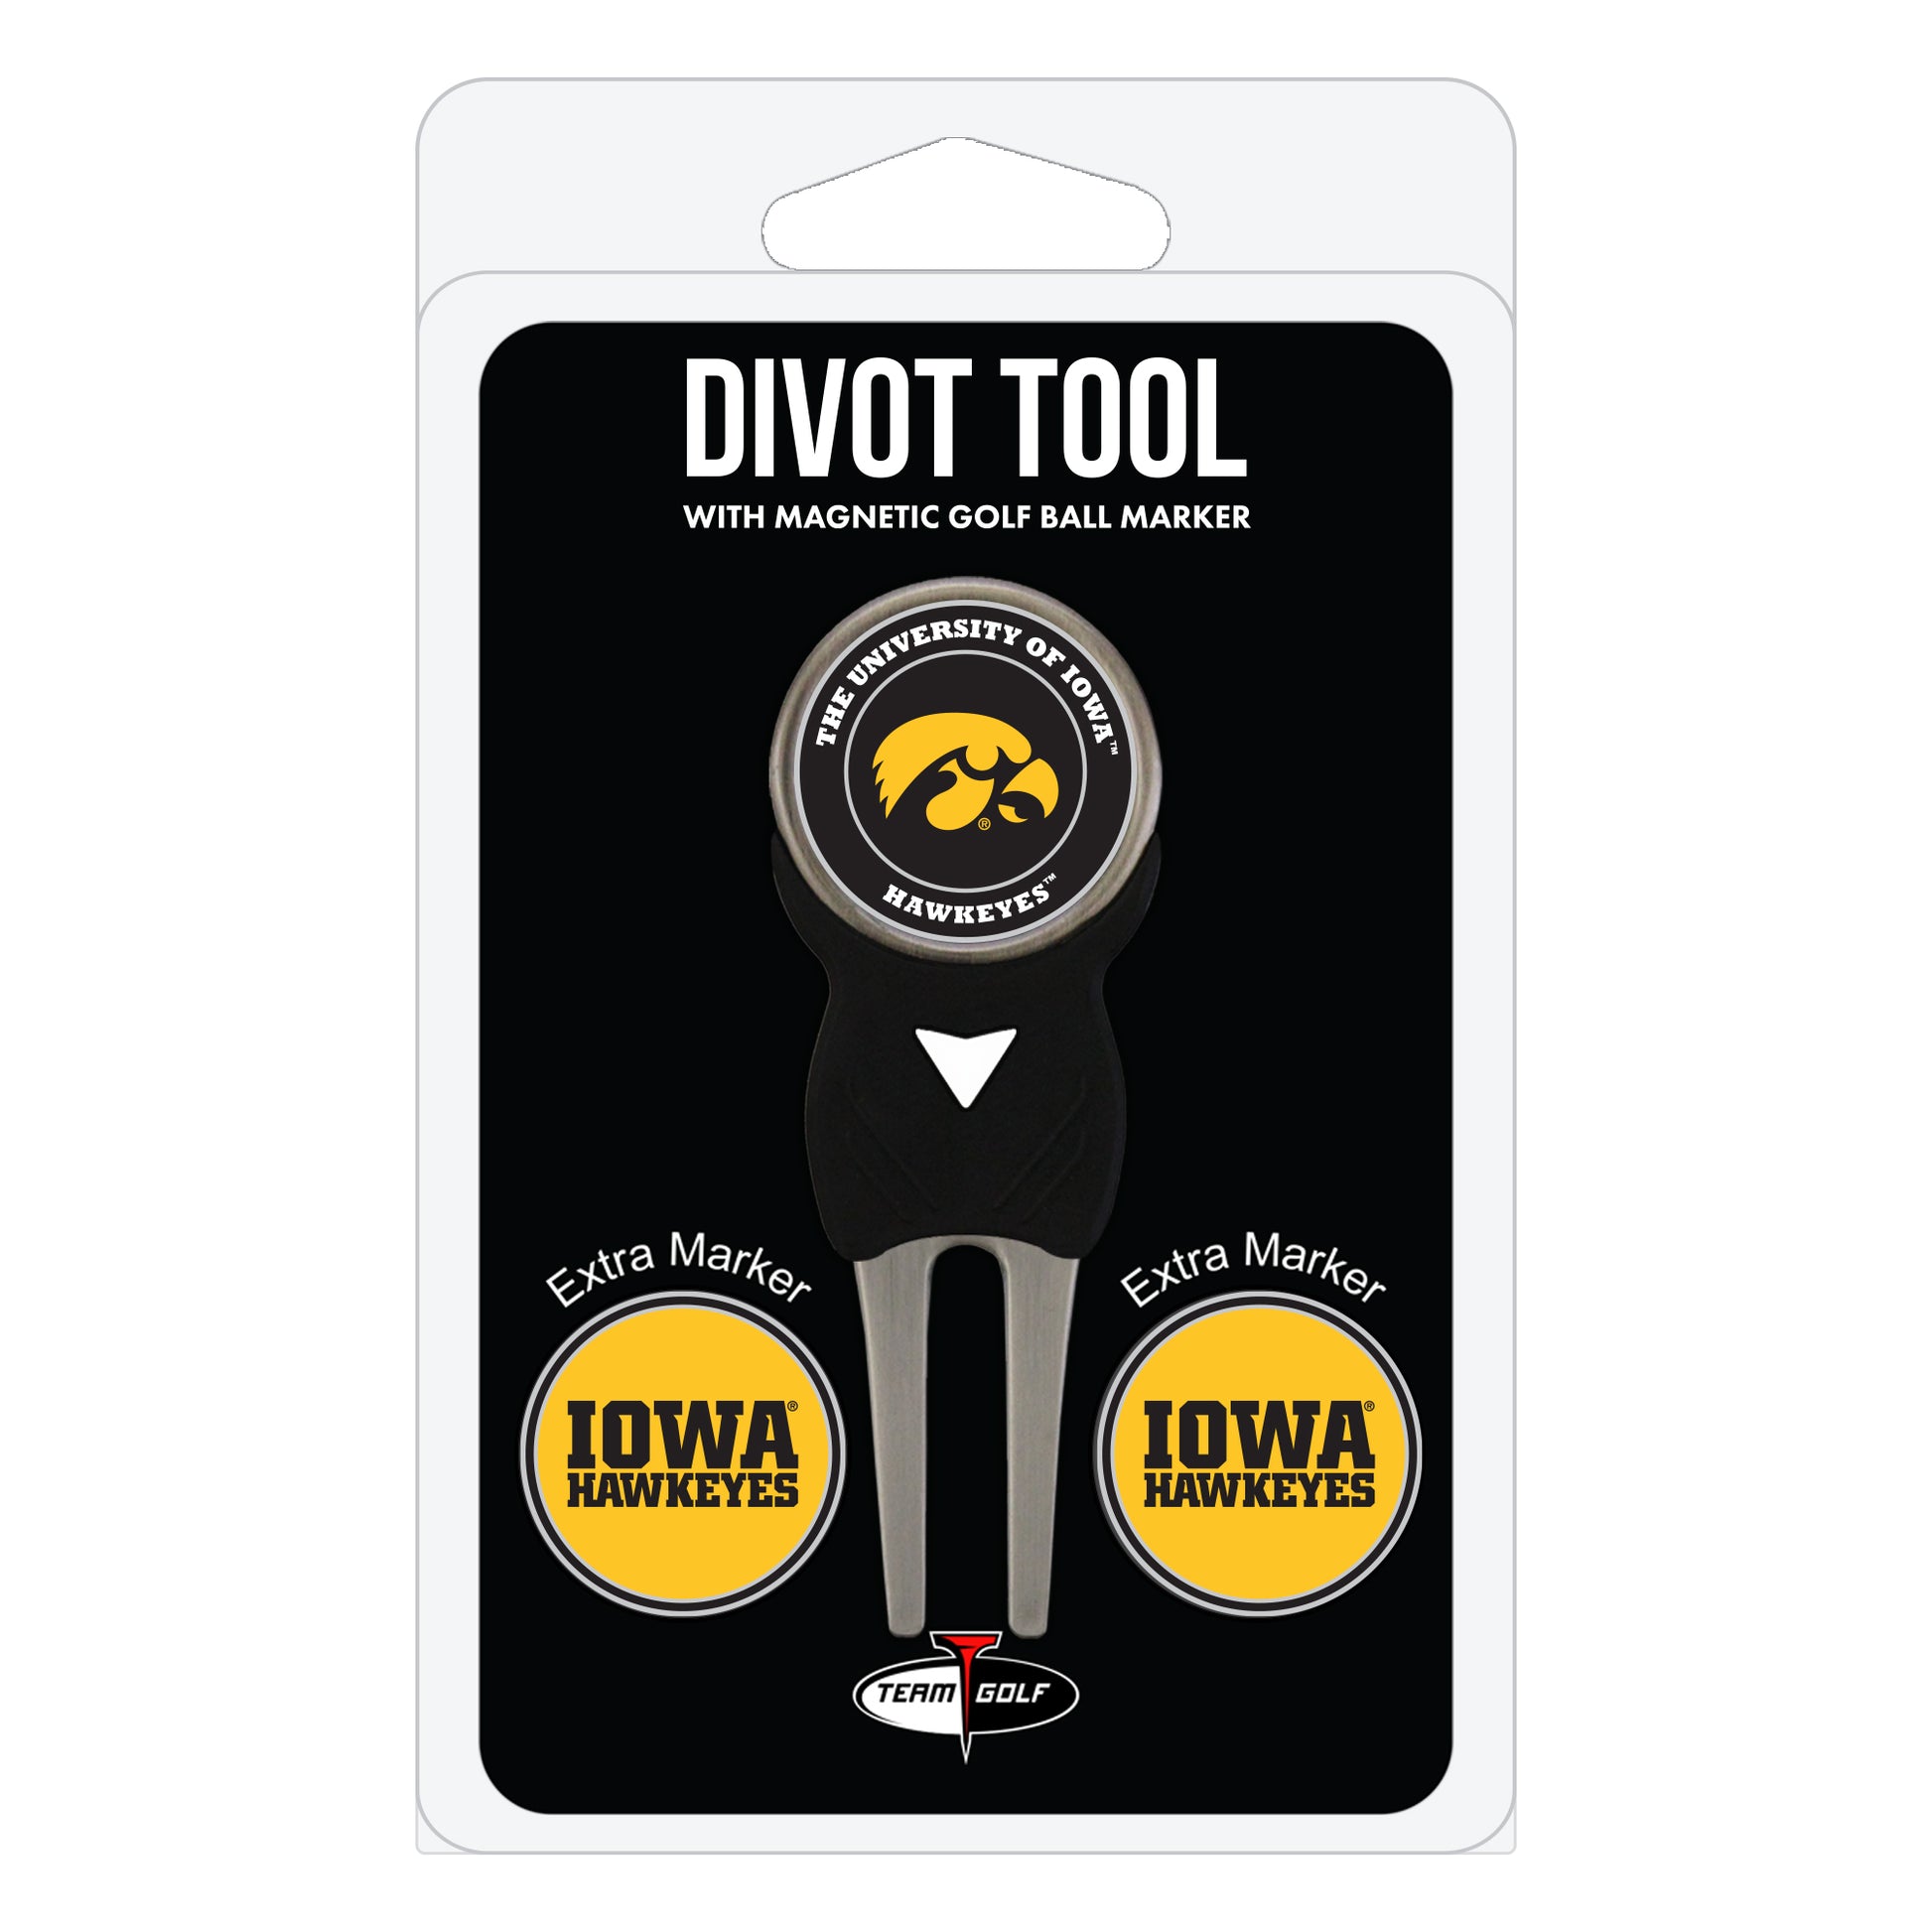 NCAA personalized golf divot tool - Iowa hawkeyes